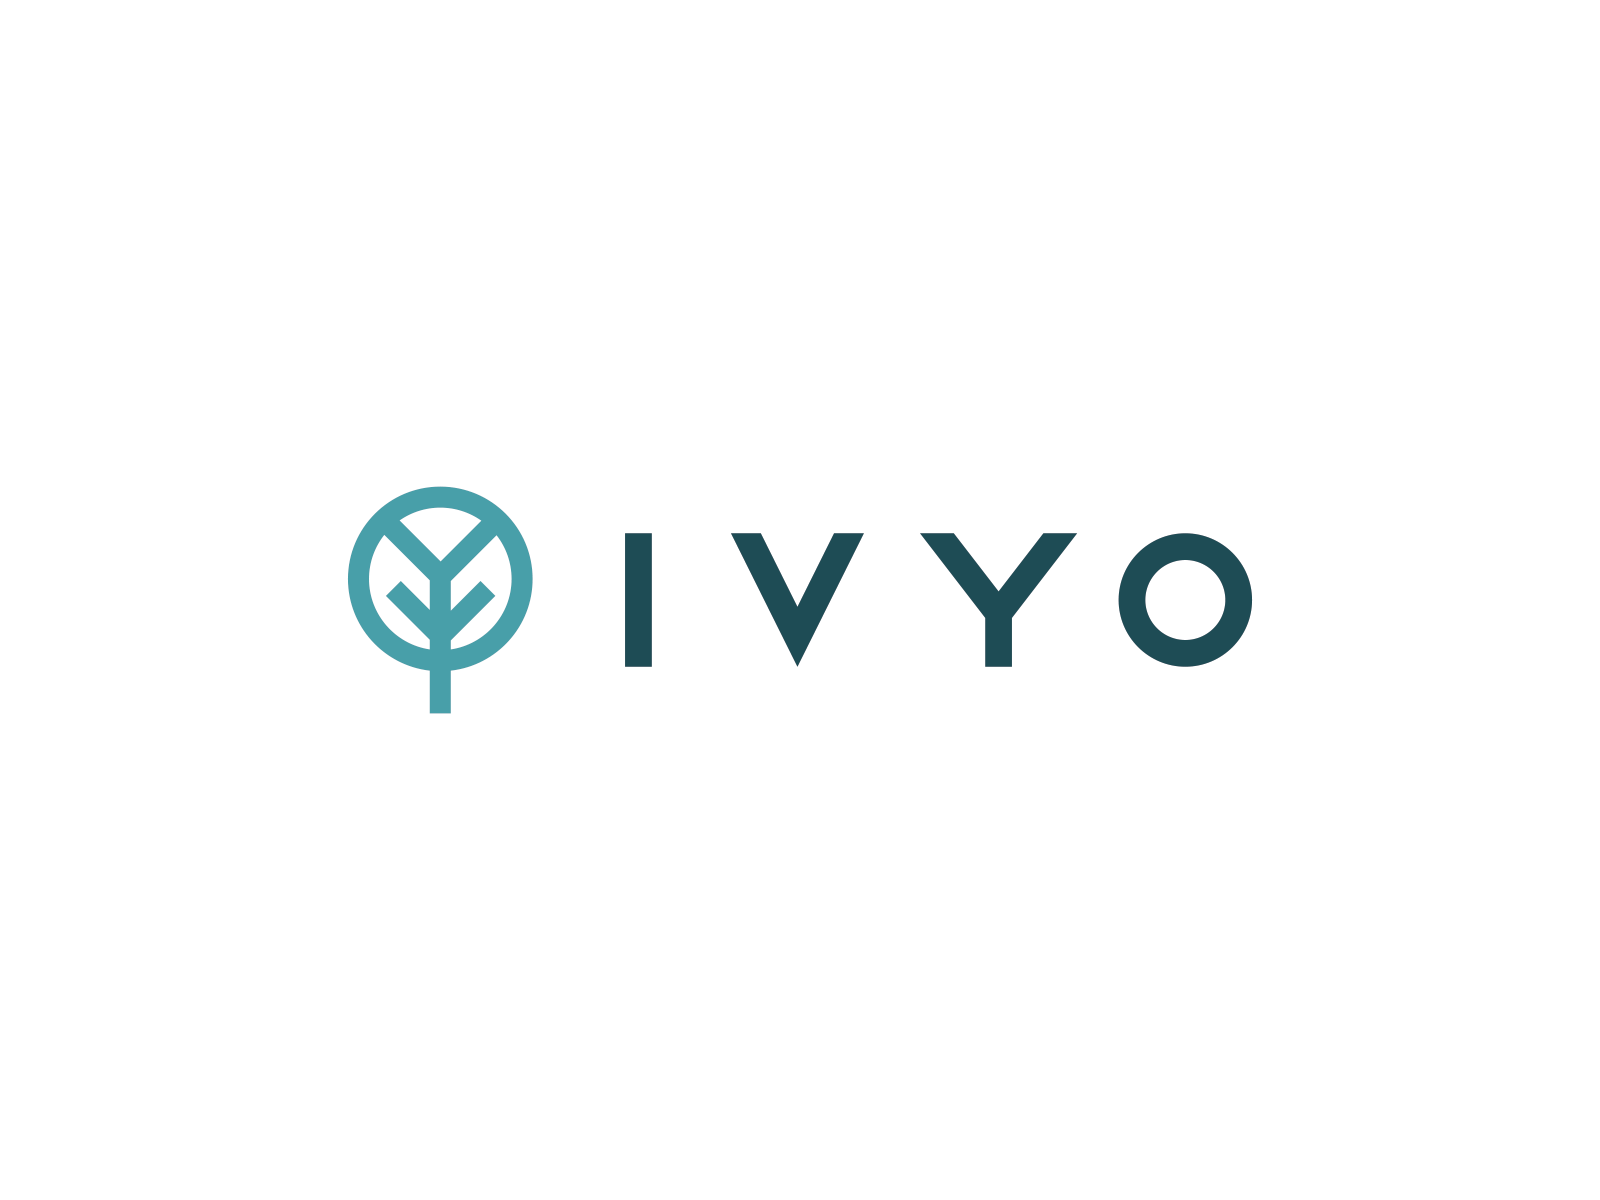 Ivyo brand branding identity logo marque tree